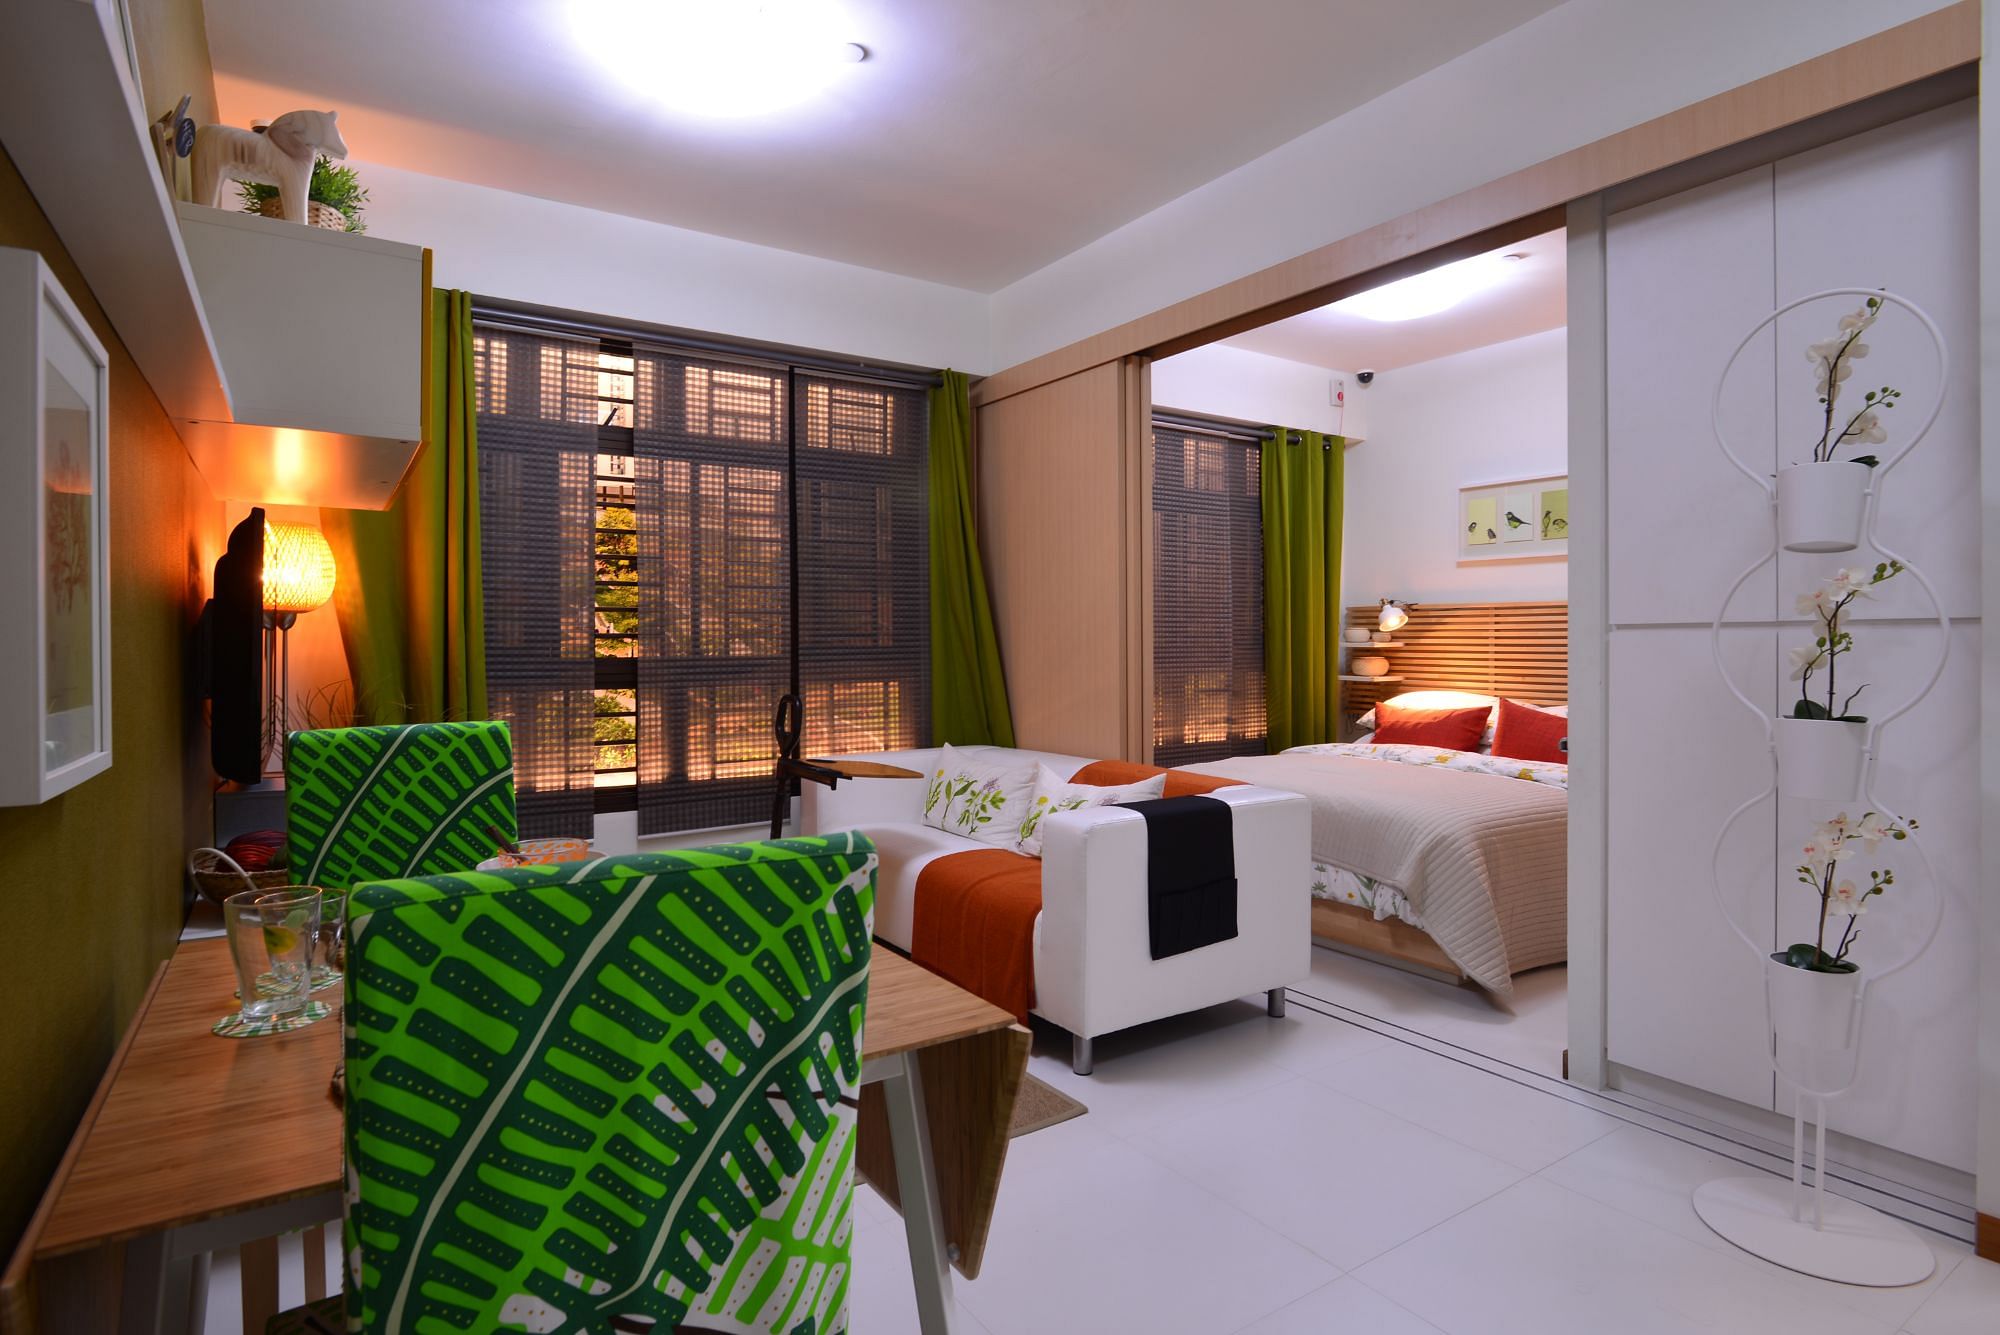 HDB 2-room Flexi Scheme Housing in Singapore